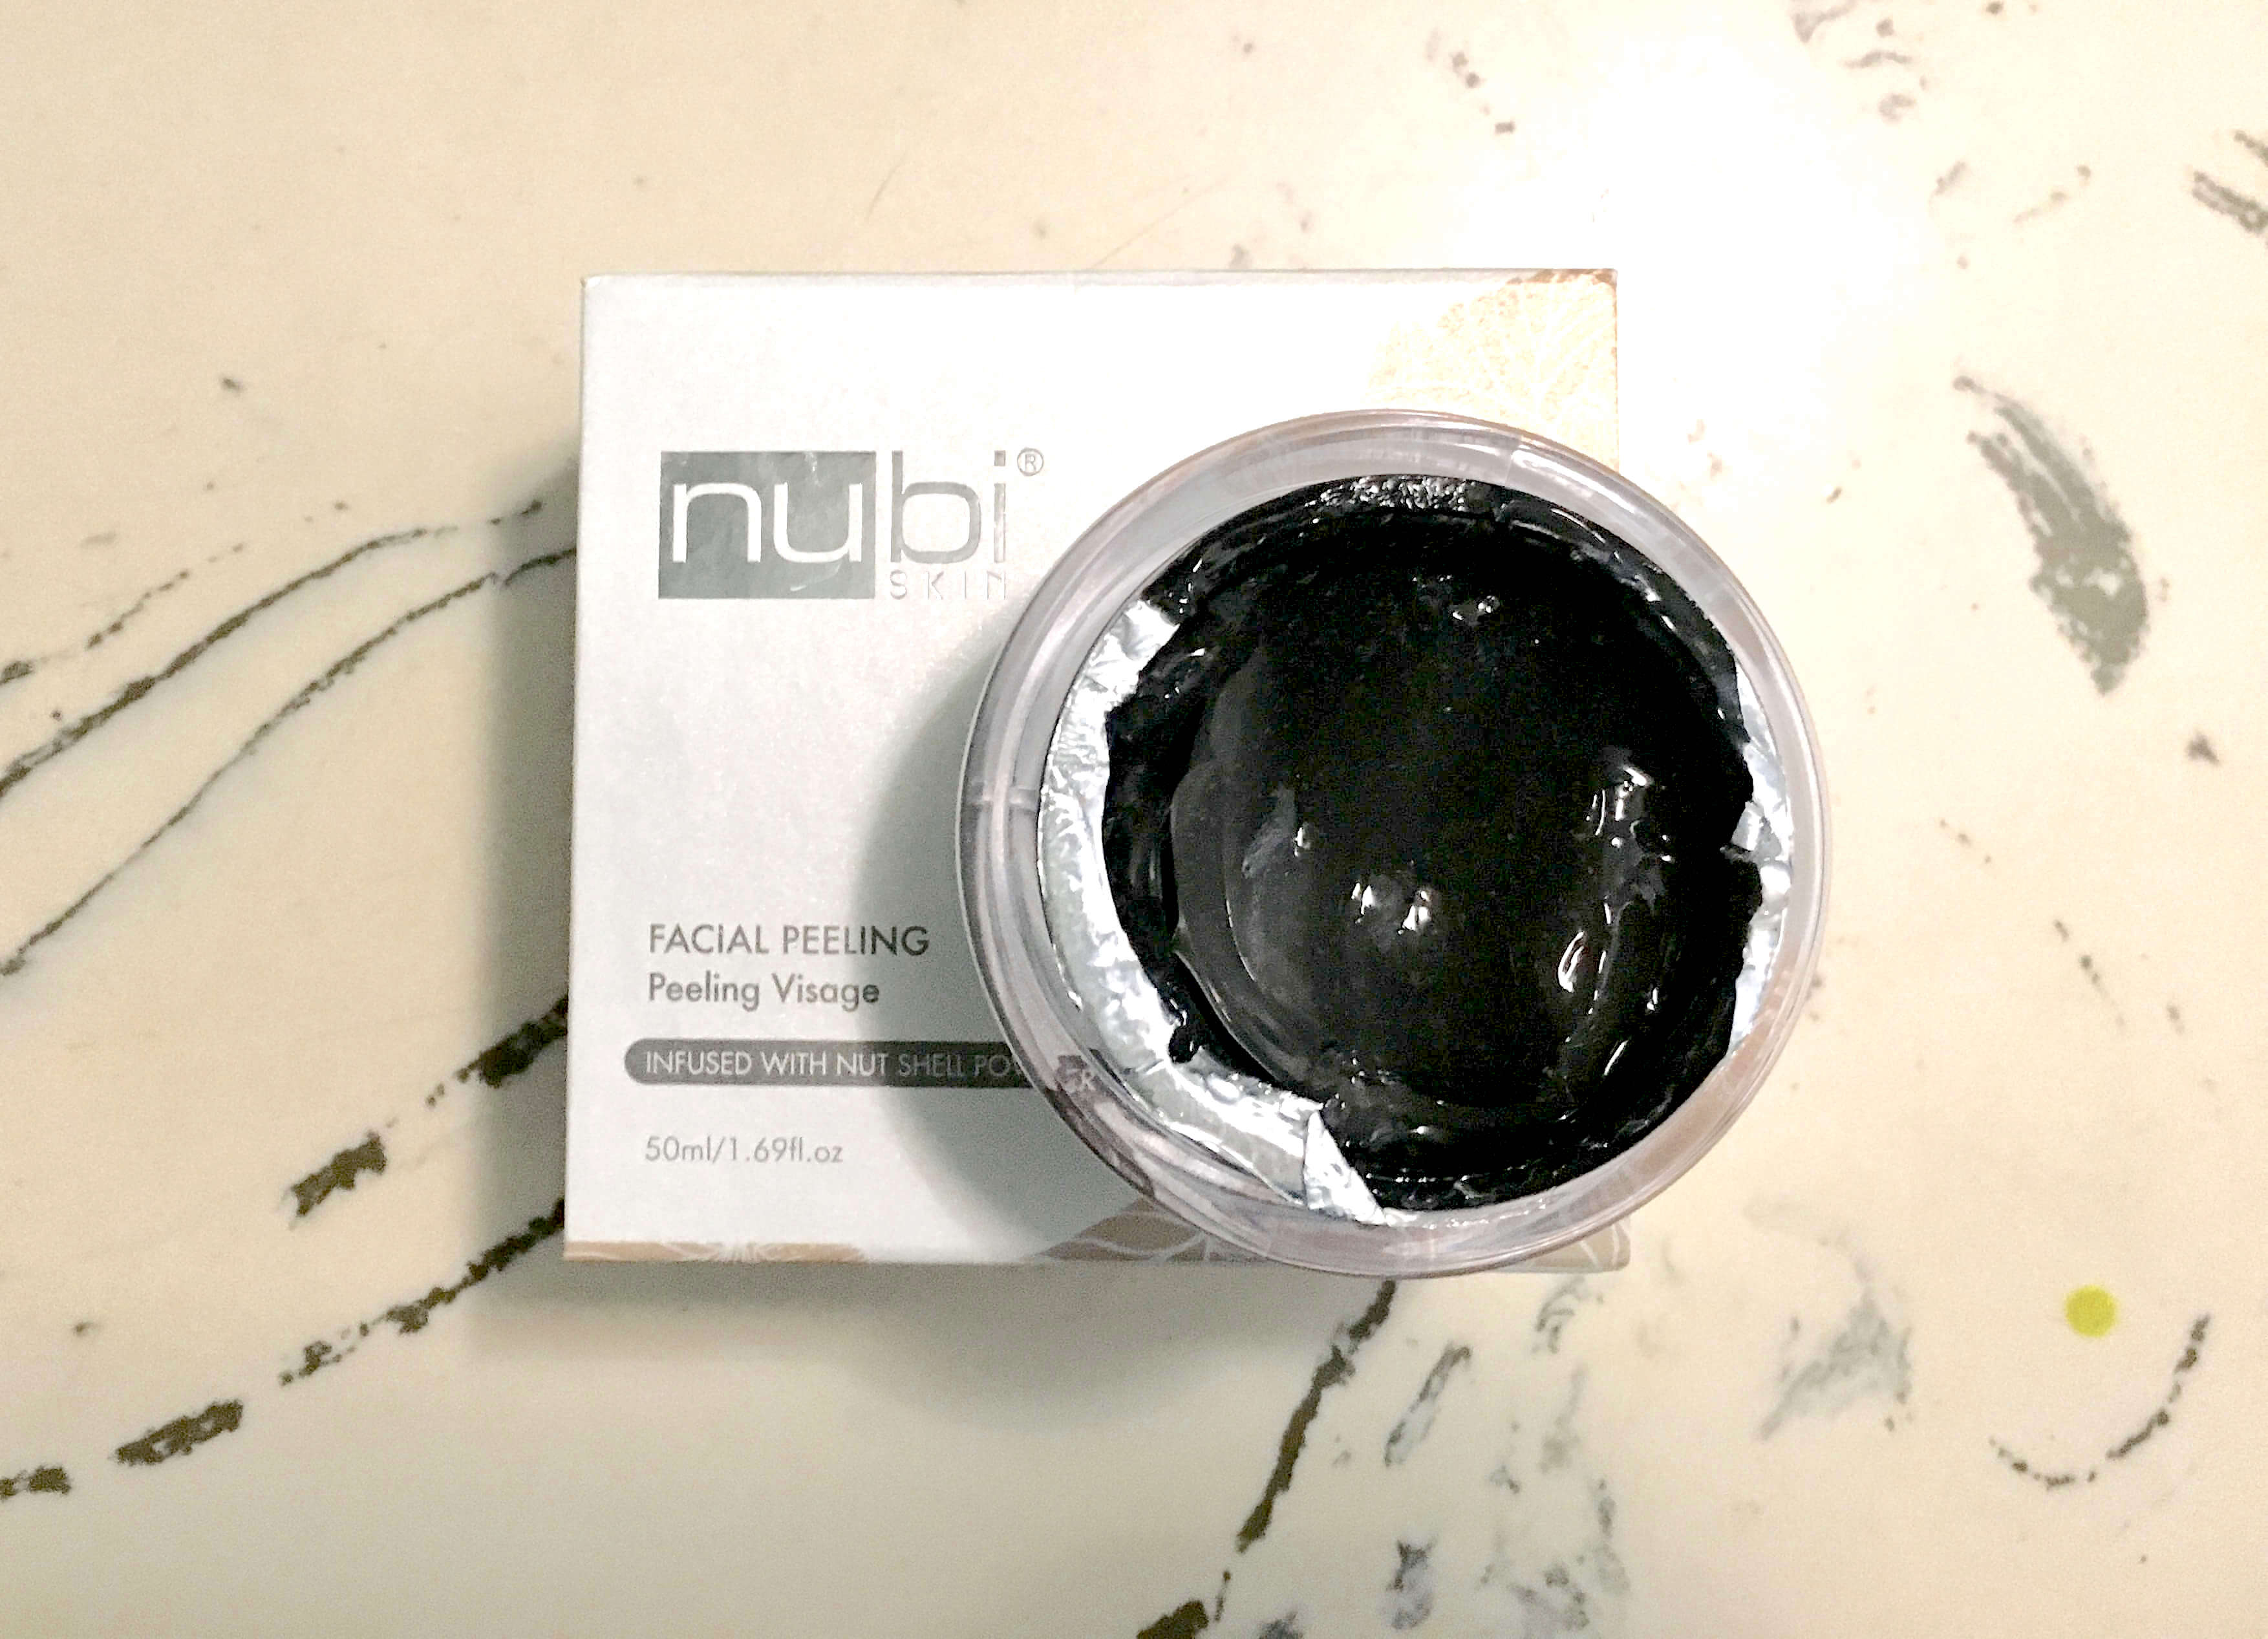 Nubi Skin Facial Peeling Visage review